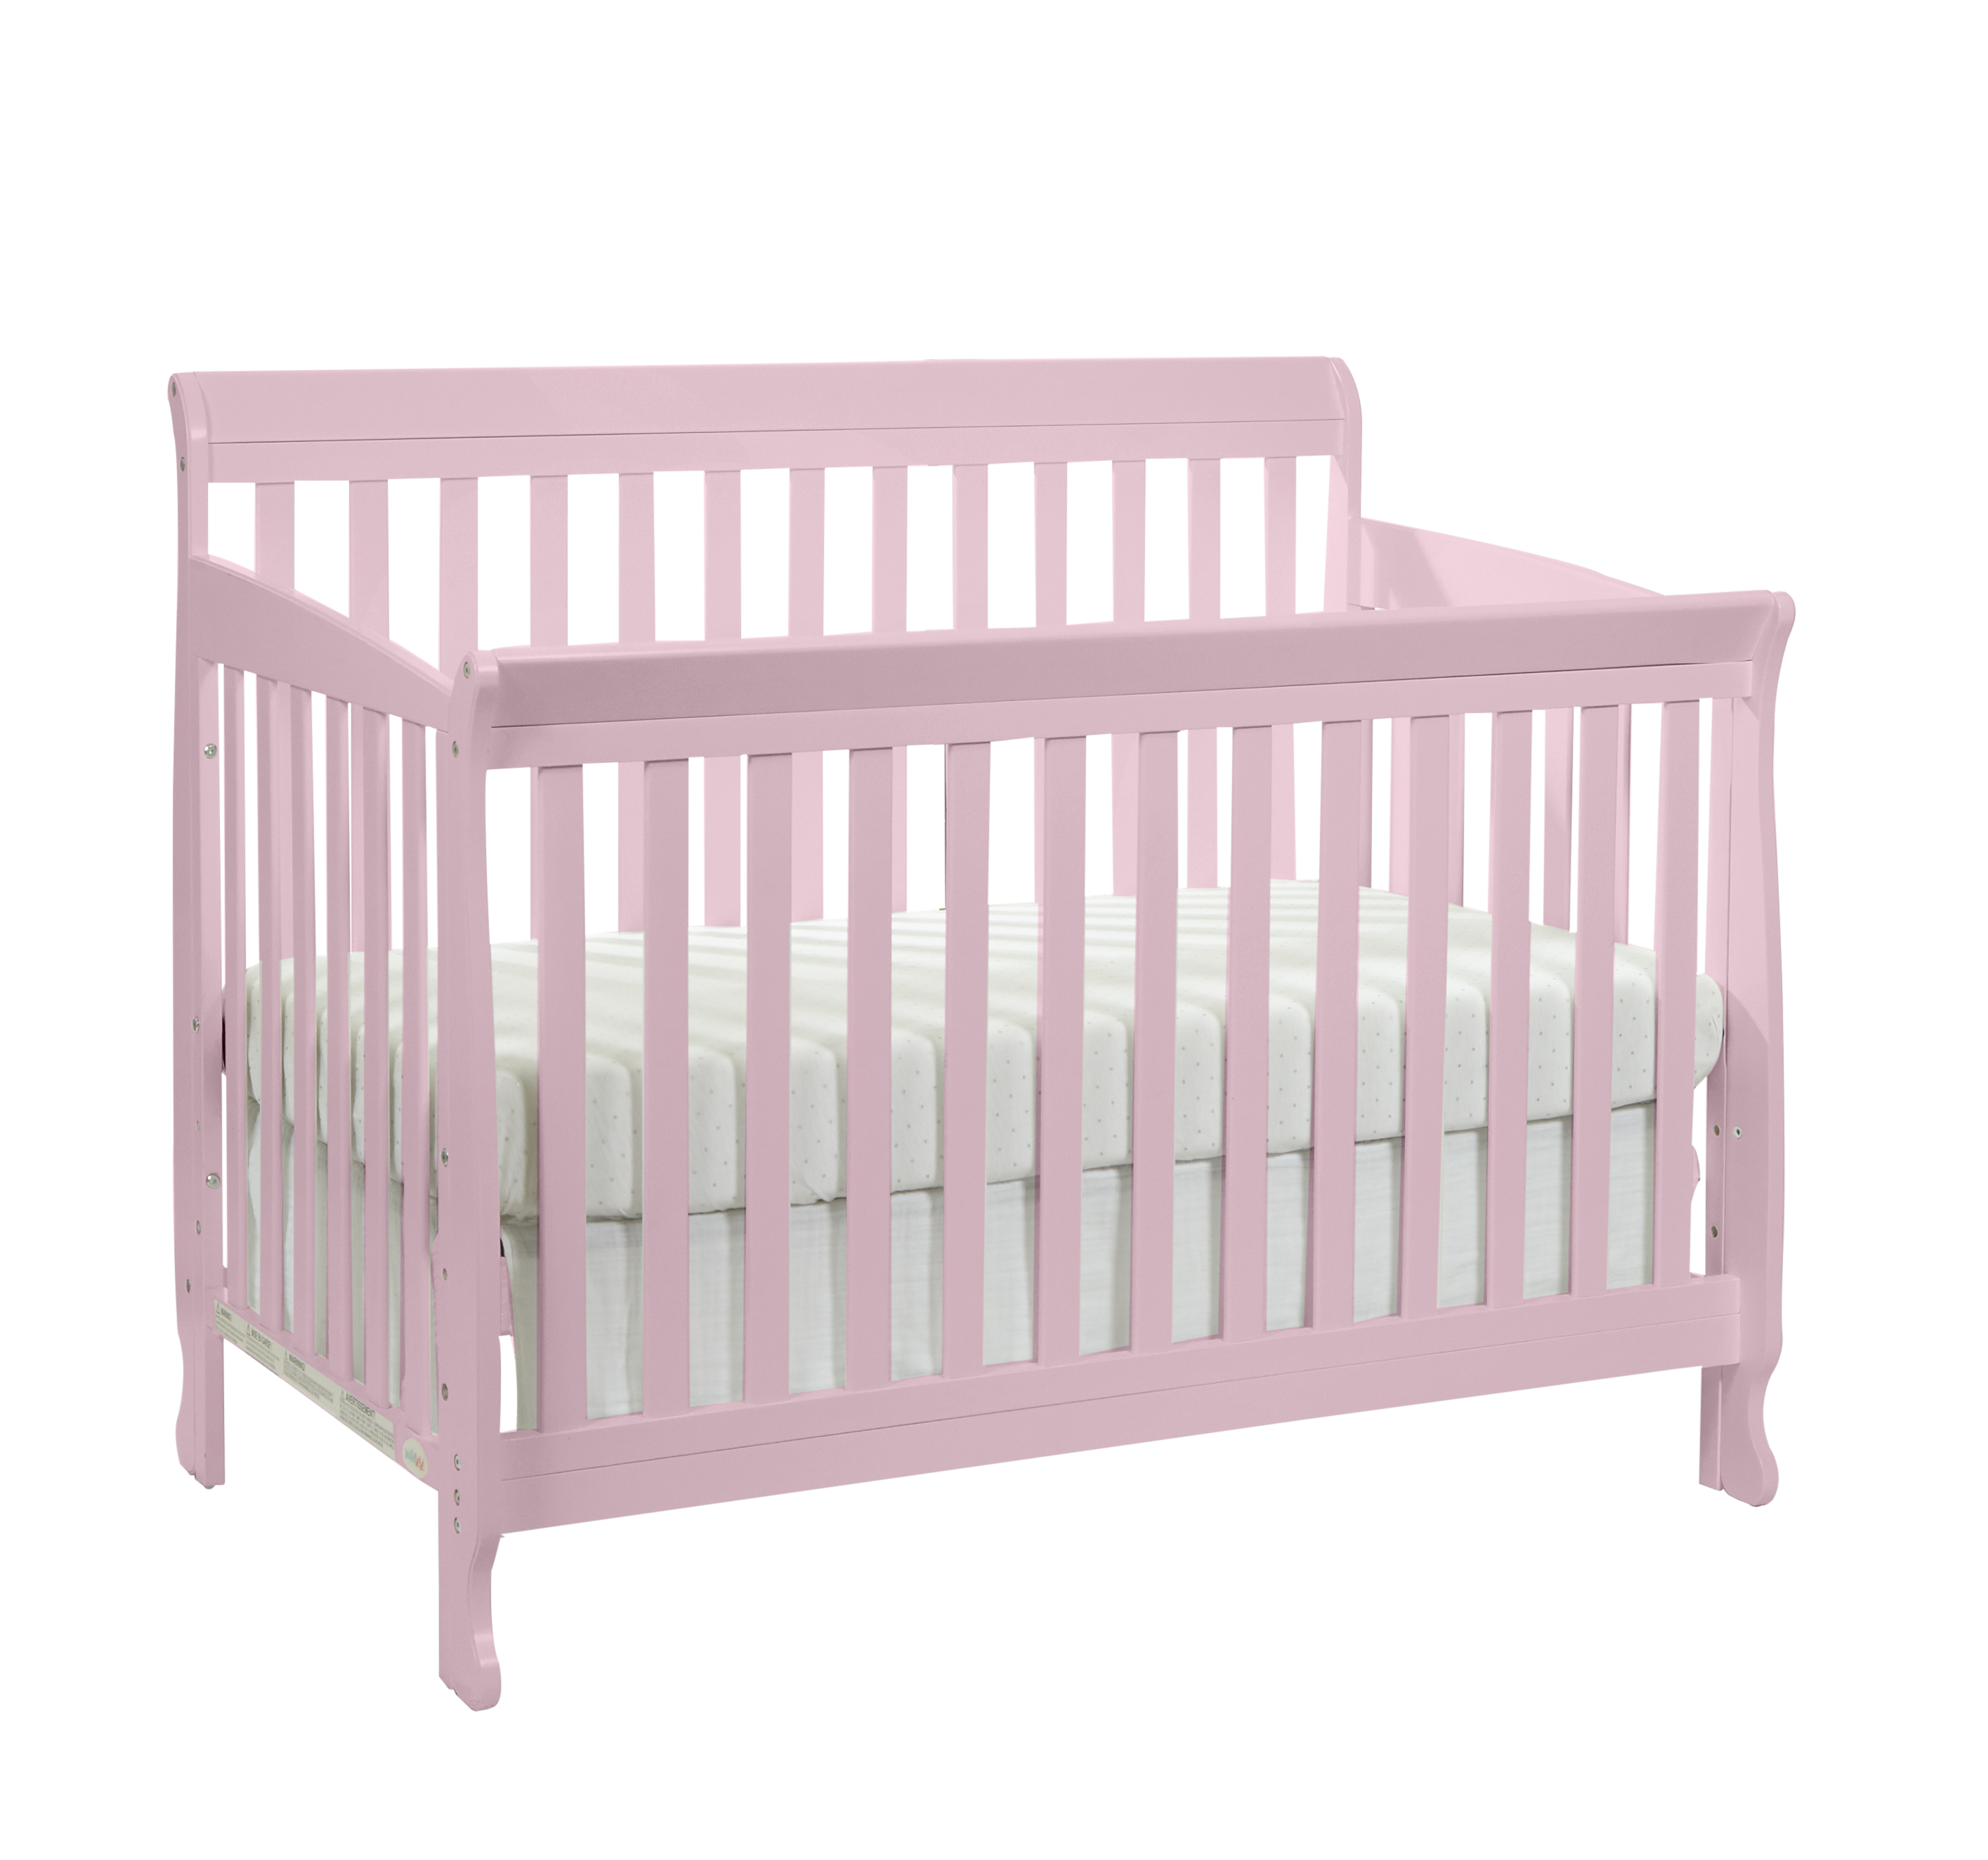 Suite Bebe Riley Crib and Toddler Guard Rail Bundle, Pink - image 5 of 8